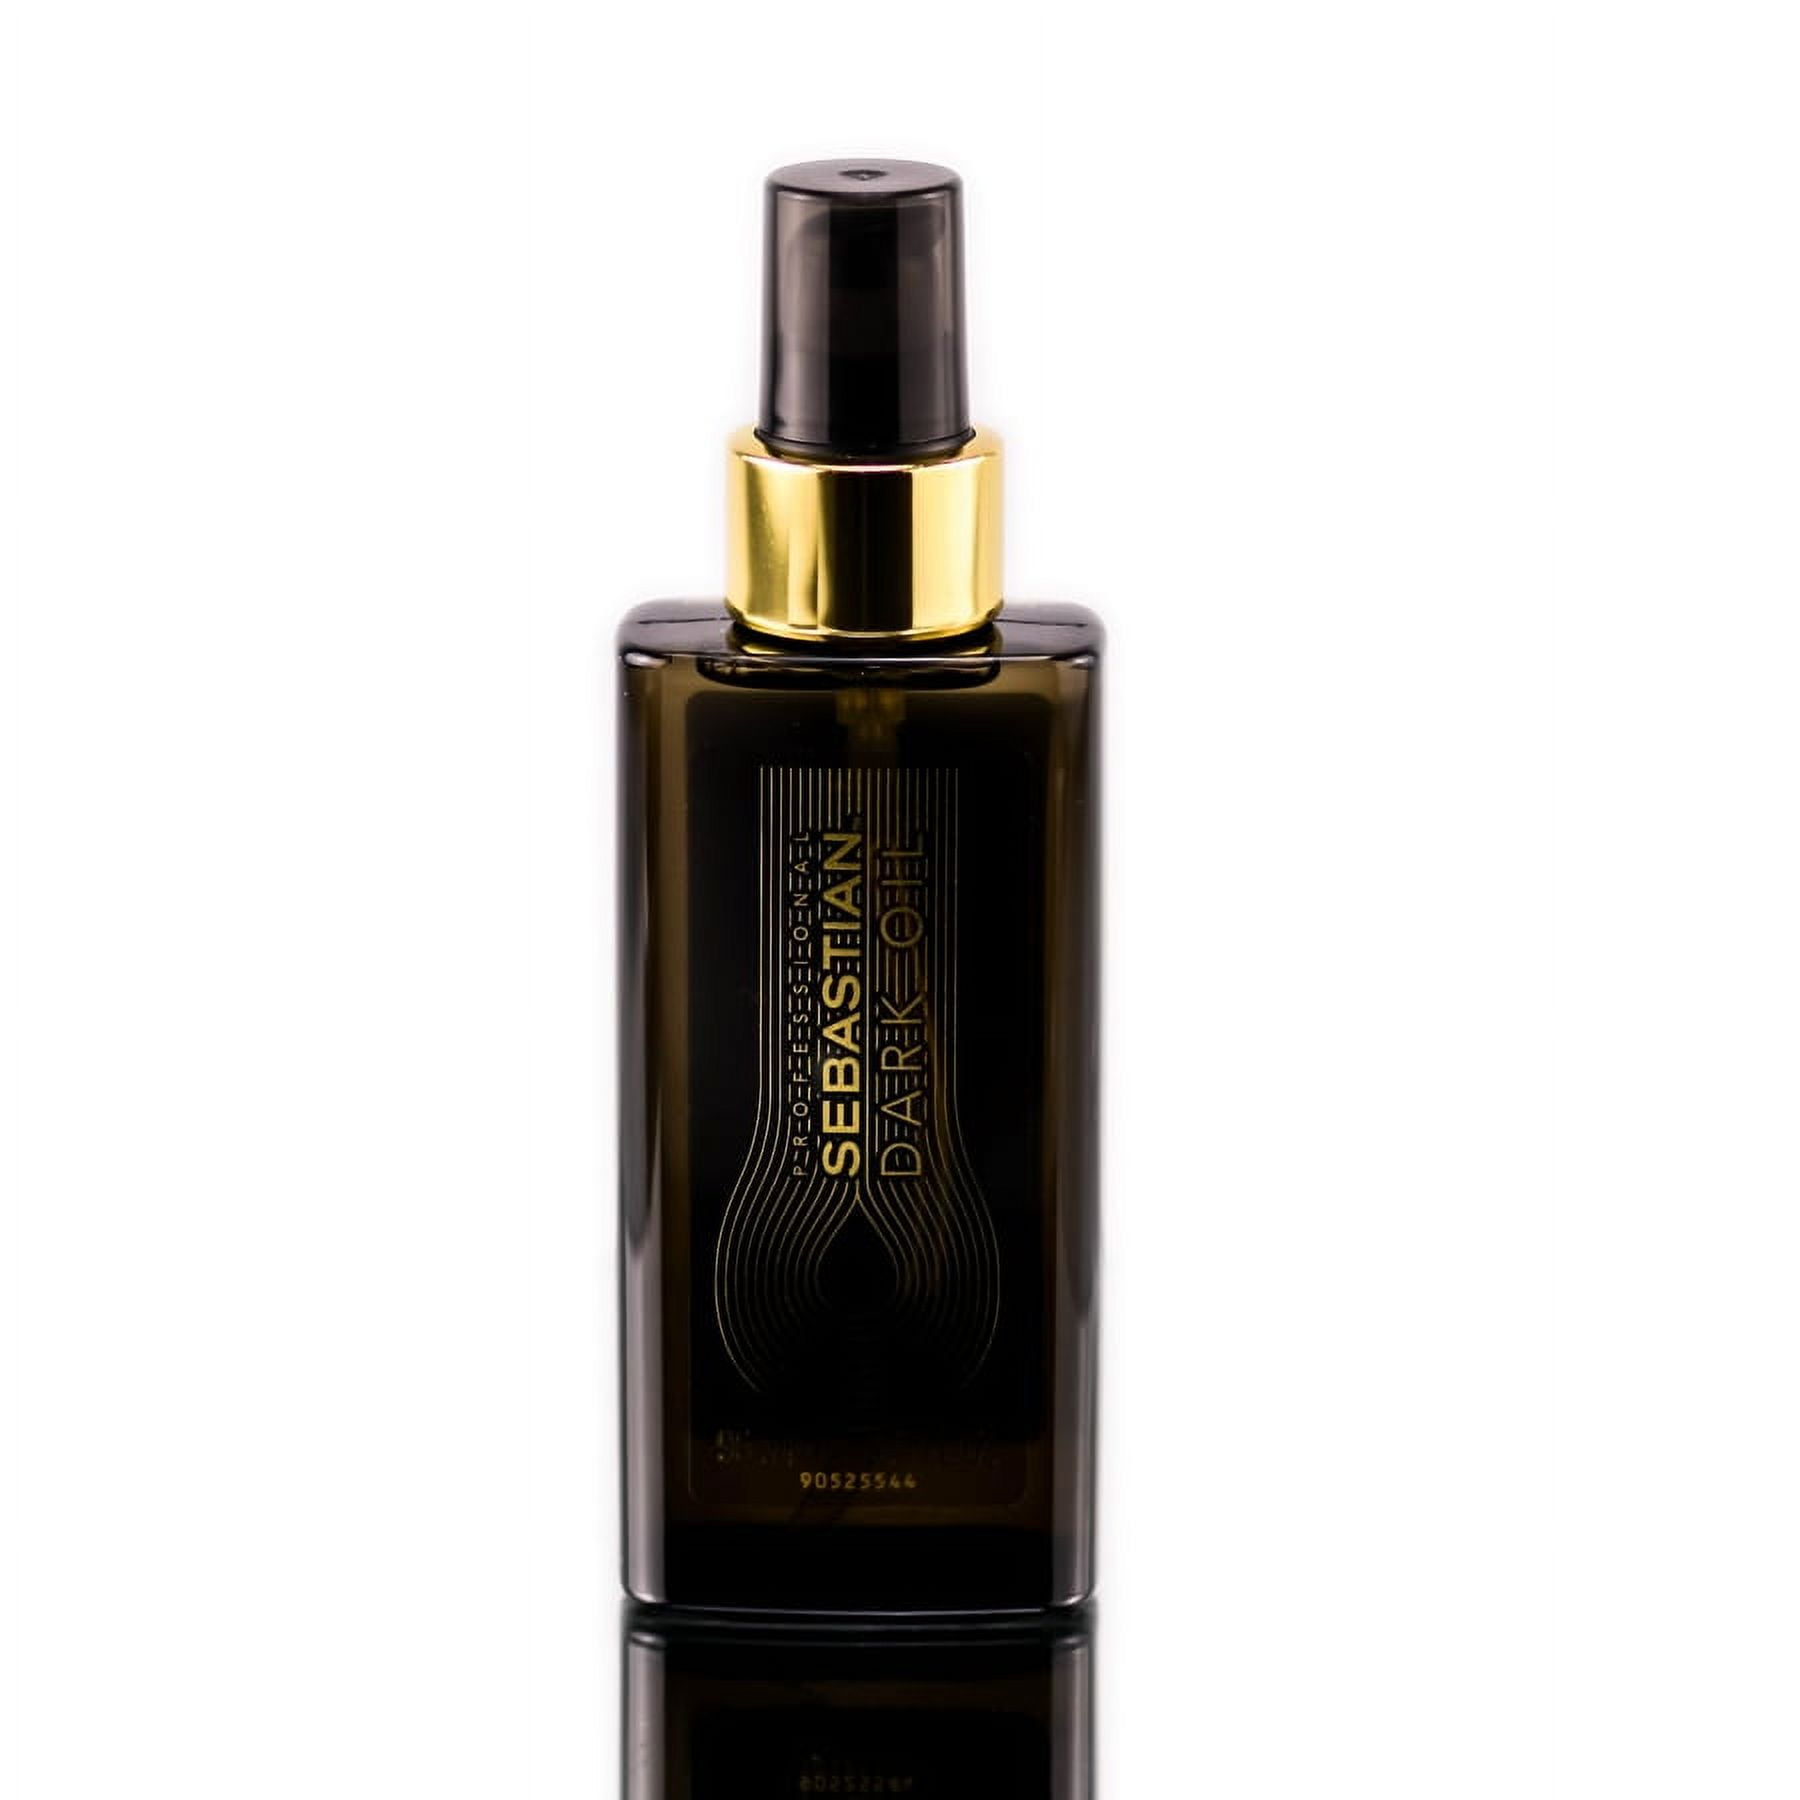 Sebastian Professional Dark Oil / Hair Oil (3.2 oz)